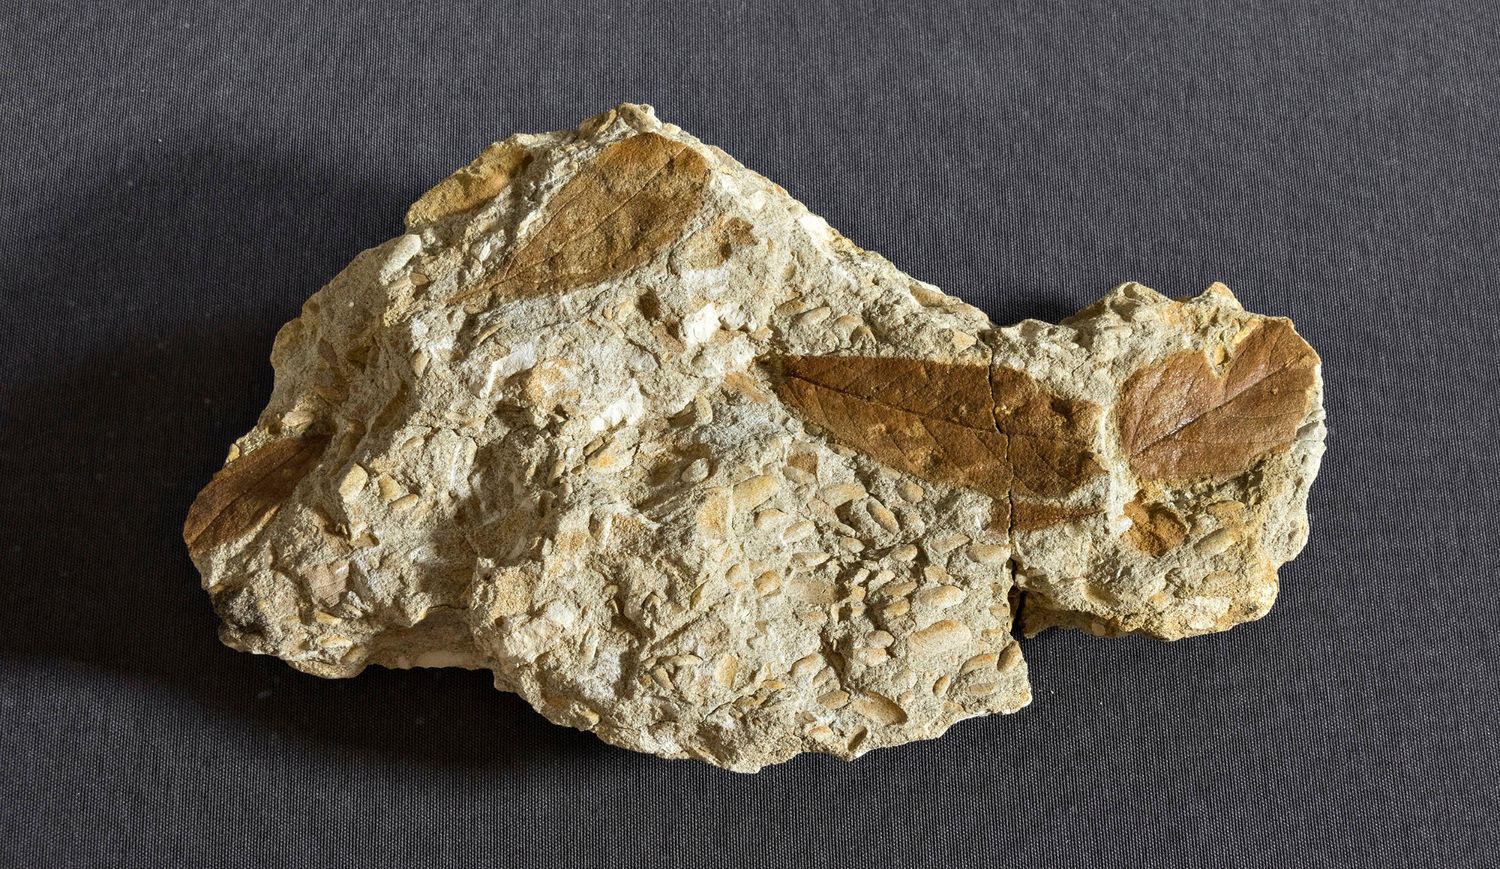 Left (top to bottom): Deinotherium, Hunsrück slate, Tertiary leaf fossils, Steeden lion. Photos: Museum Wiesbaden / Bernd Fickert